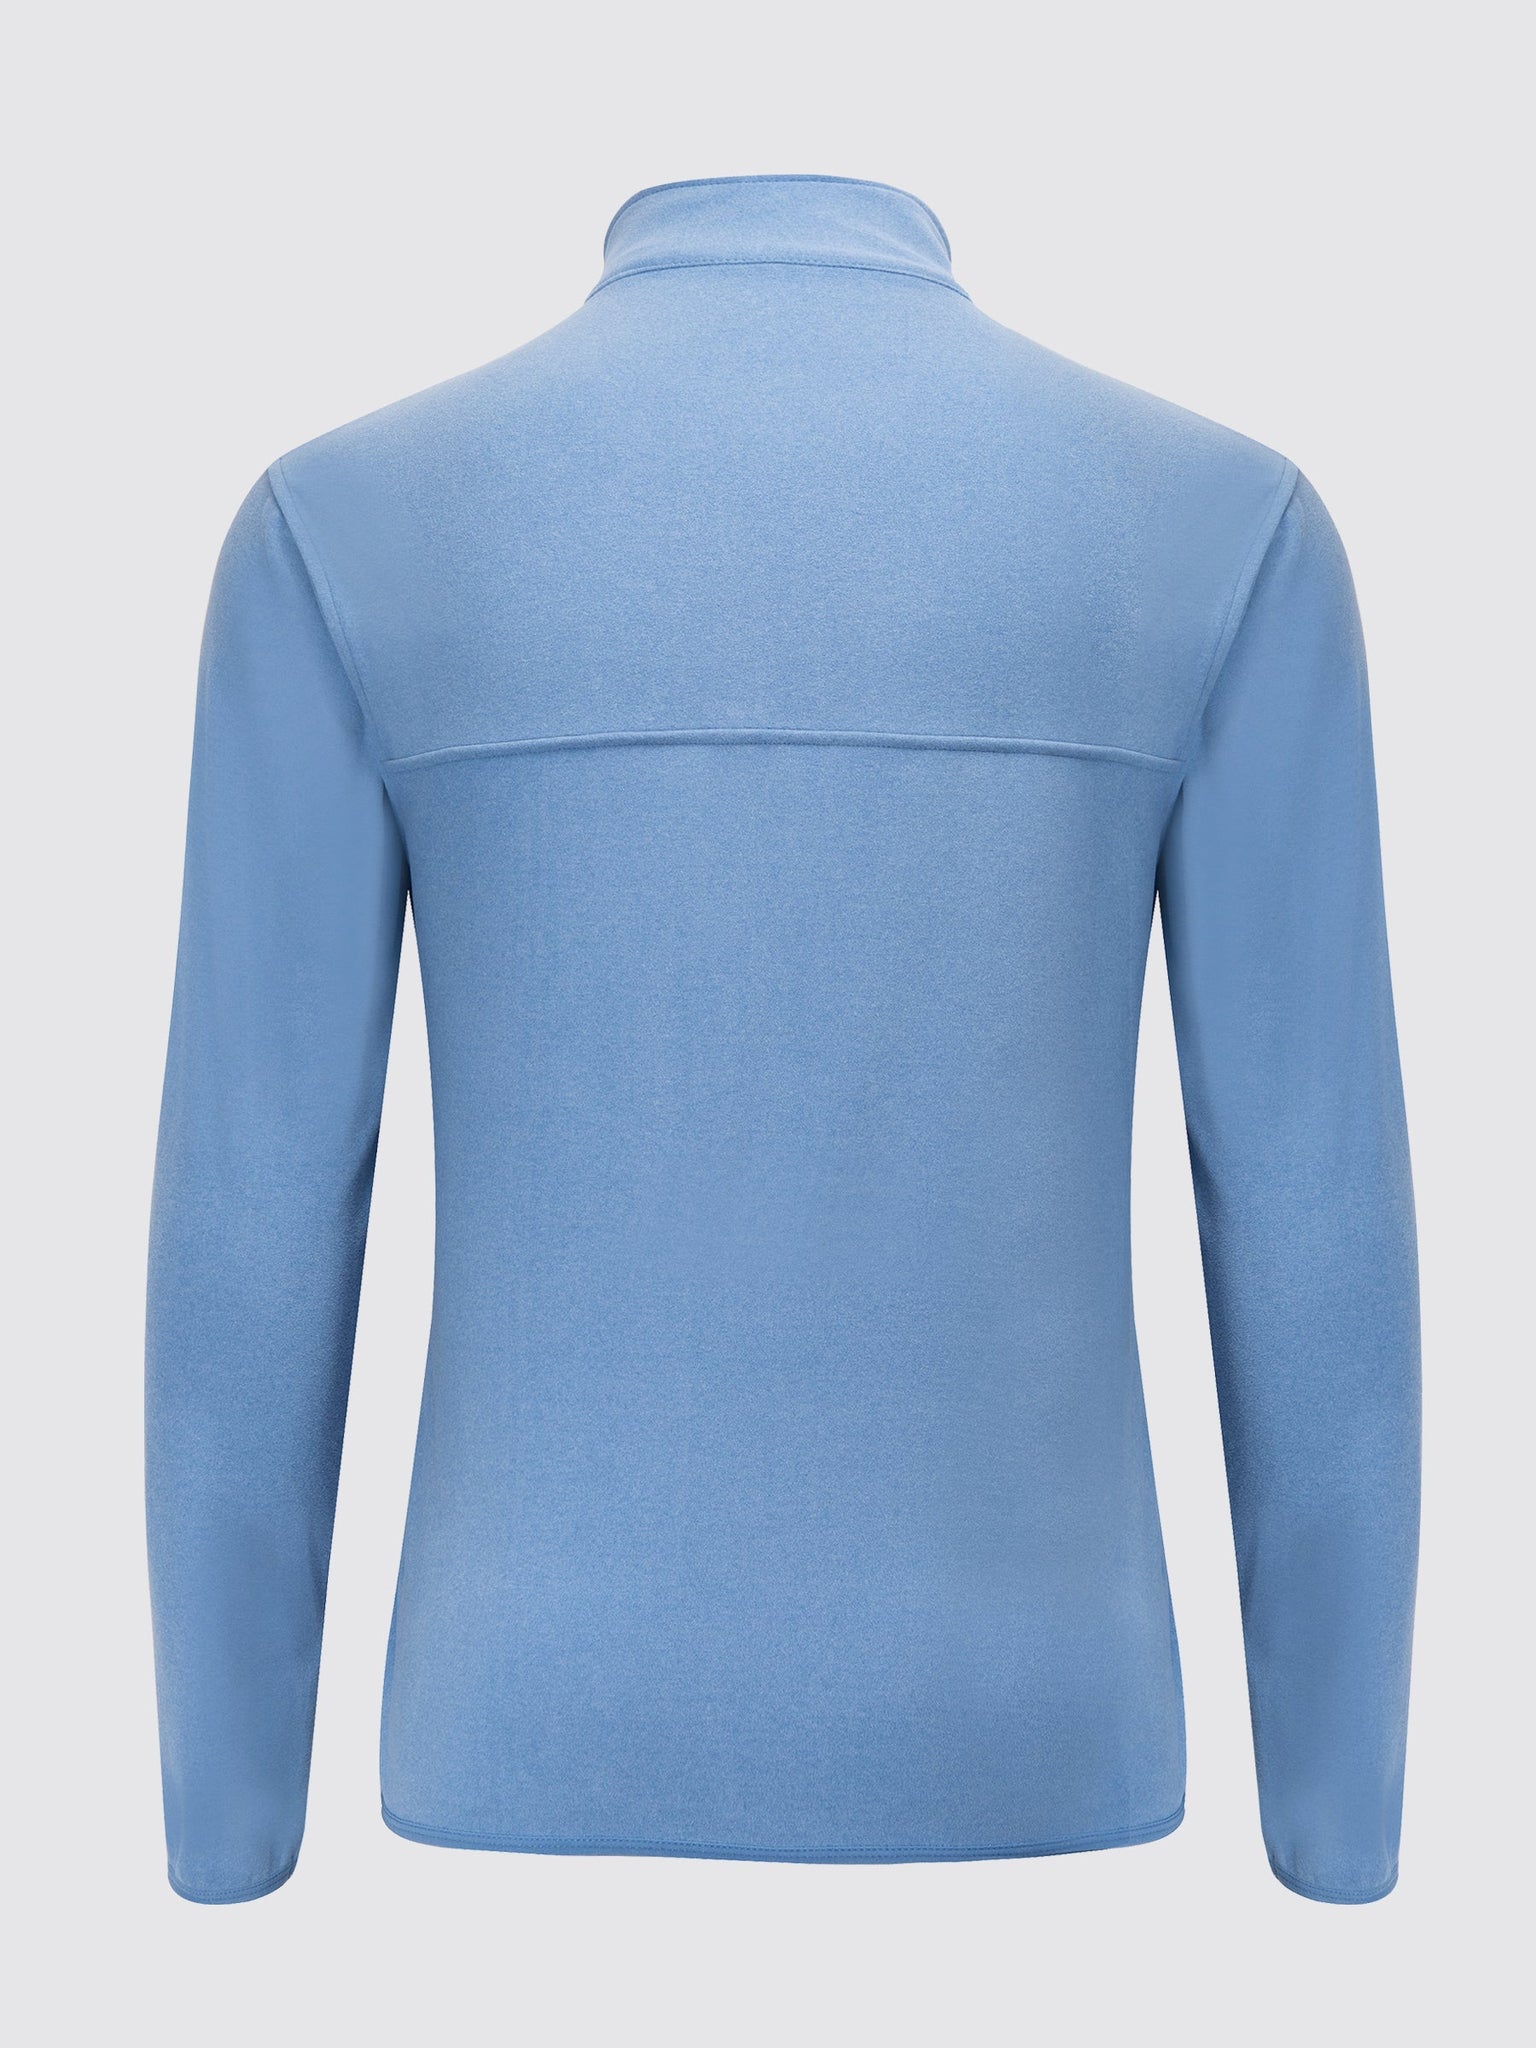 Willit Men's Fleece Pullover Lightweight Sportswear_Laydown_Blue3